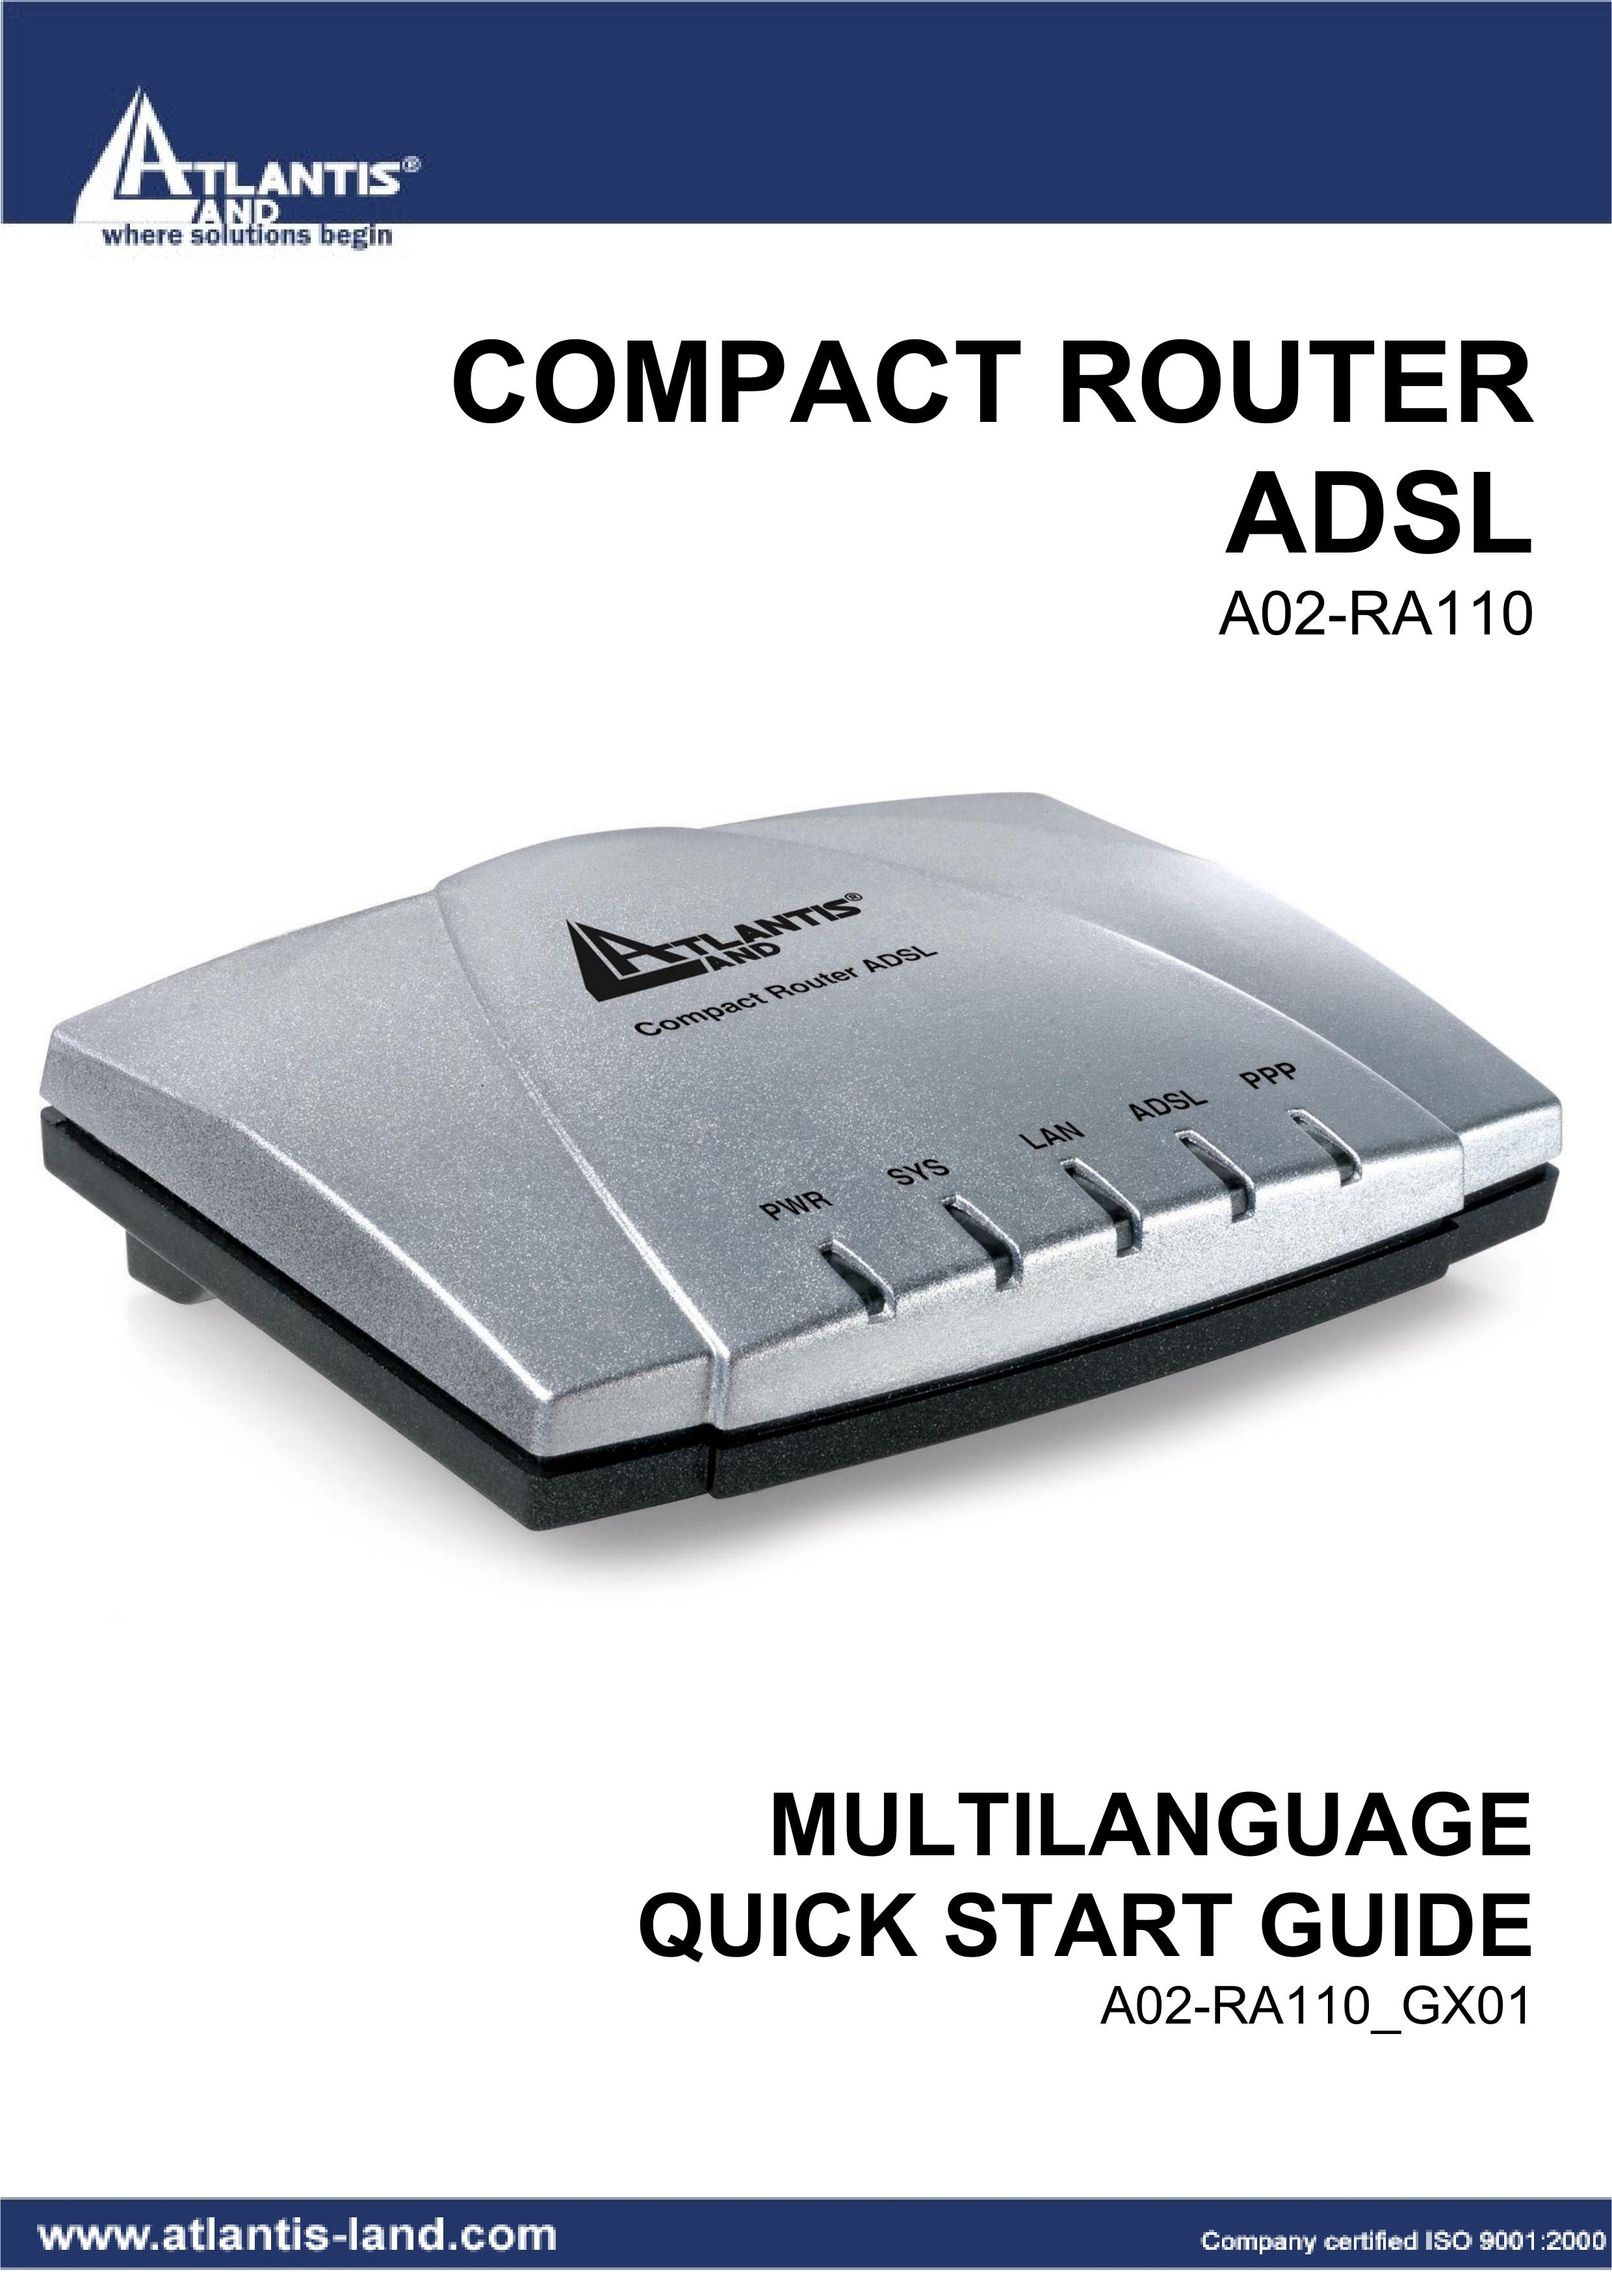 Atlantis Land A02-RA110 Network Router User Manual